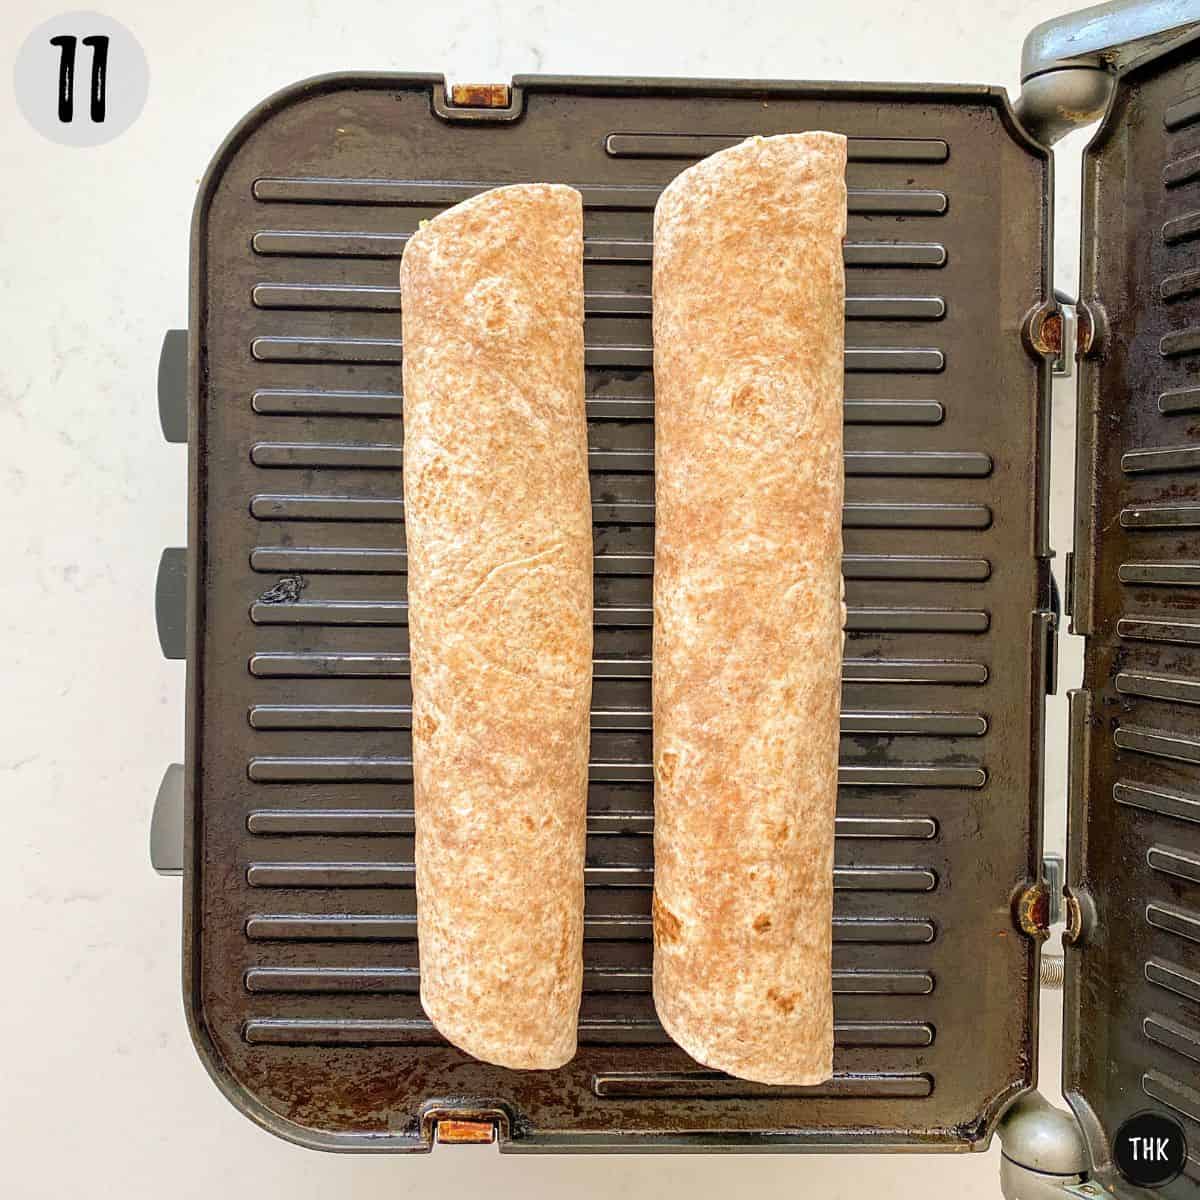 Two tortilla rolls on panini press.